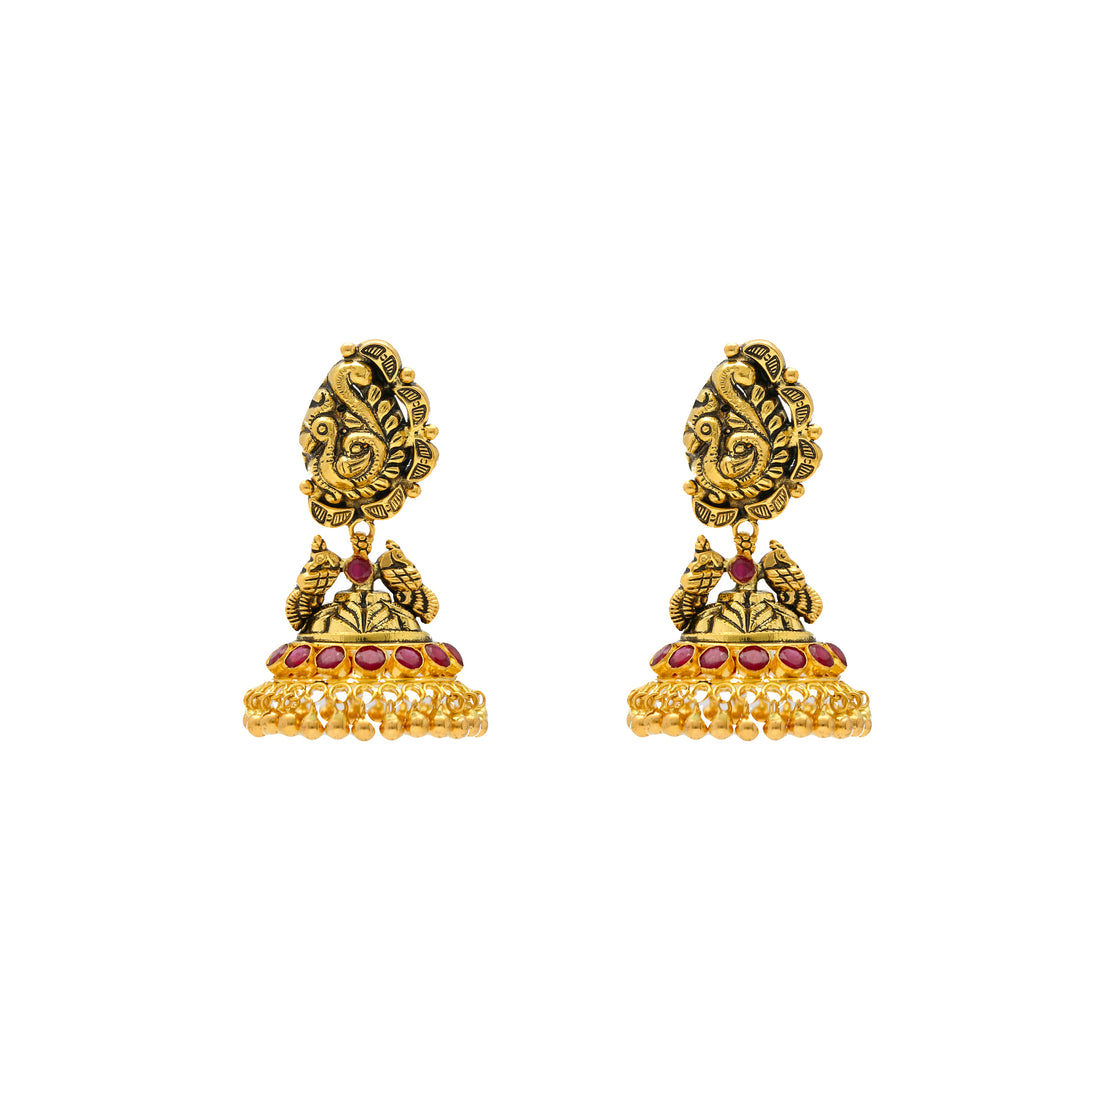 22K Gold Hoop Earrings (Ear Bali) - Bali Jhumkas For Women - 235-GER16119  in 8.600 Grams